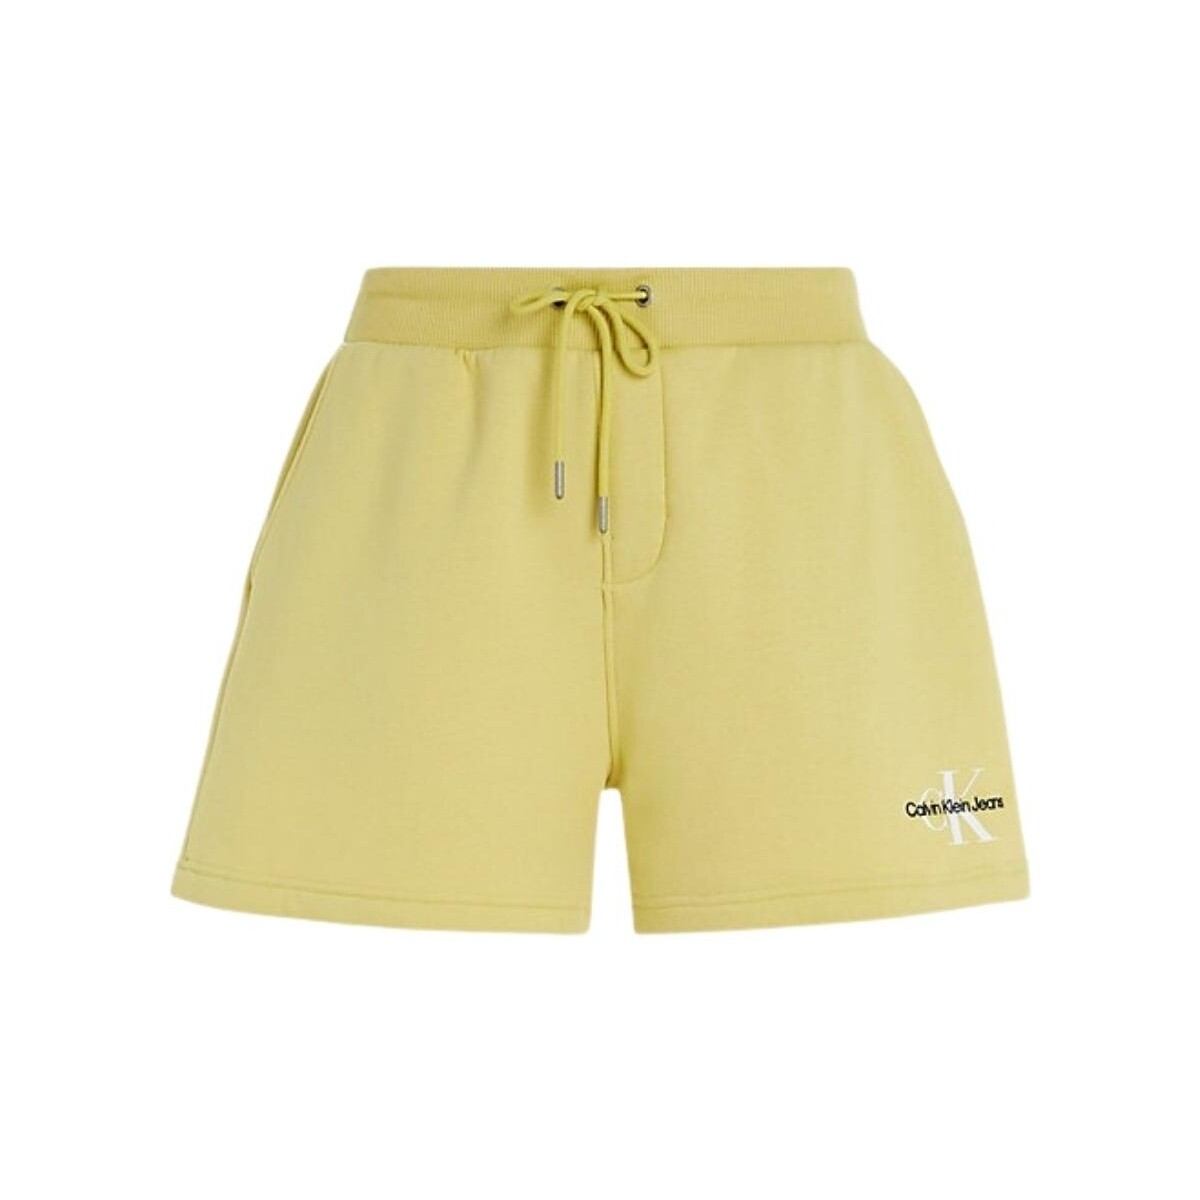 Vêtements Homme Shorts / Bermudas Calvin Klein Jeans Short homme  Ref 60388 KCQ Jaune Jaune